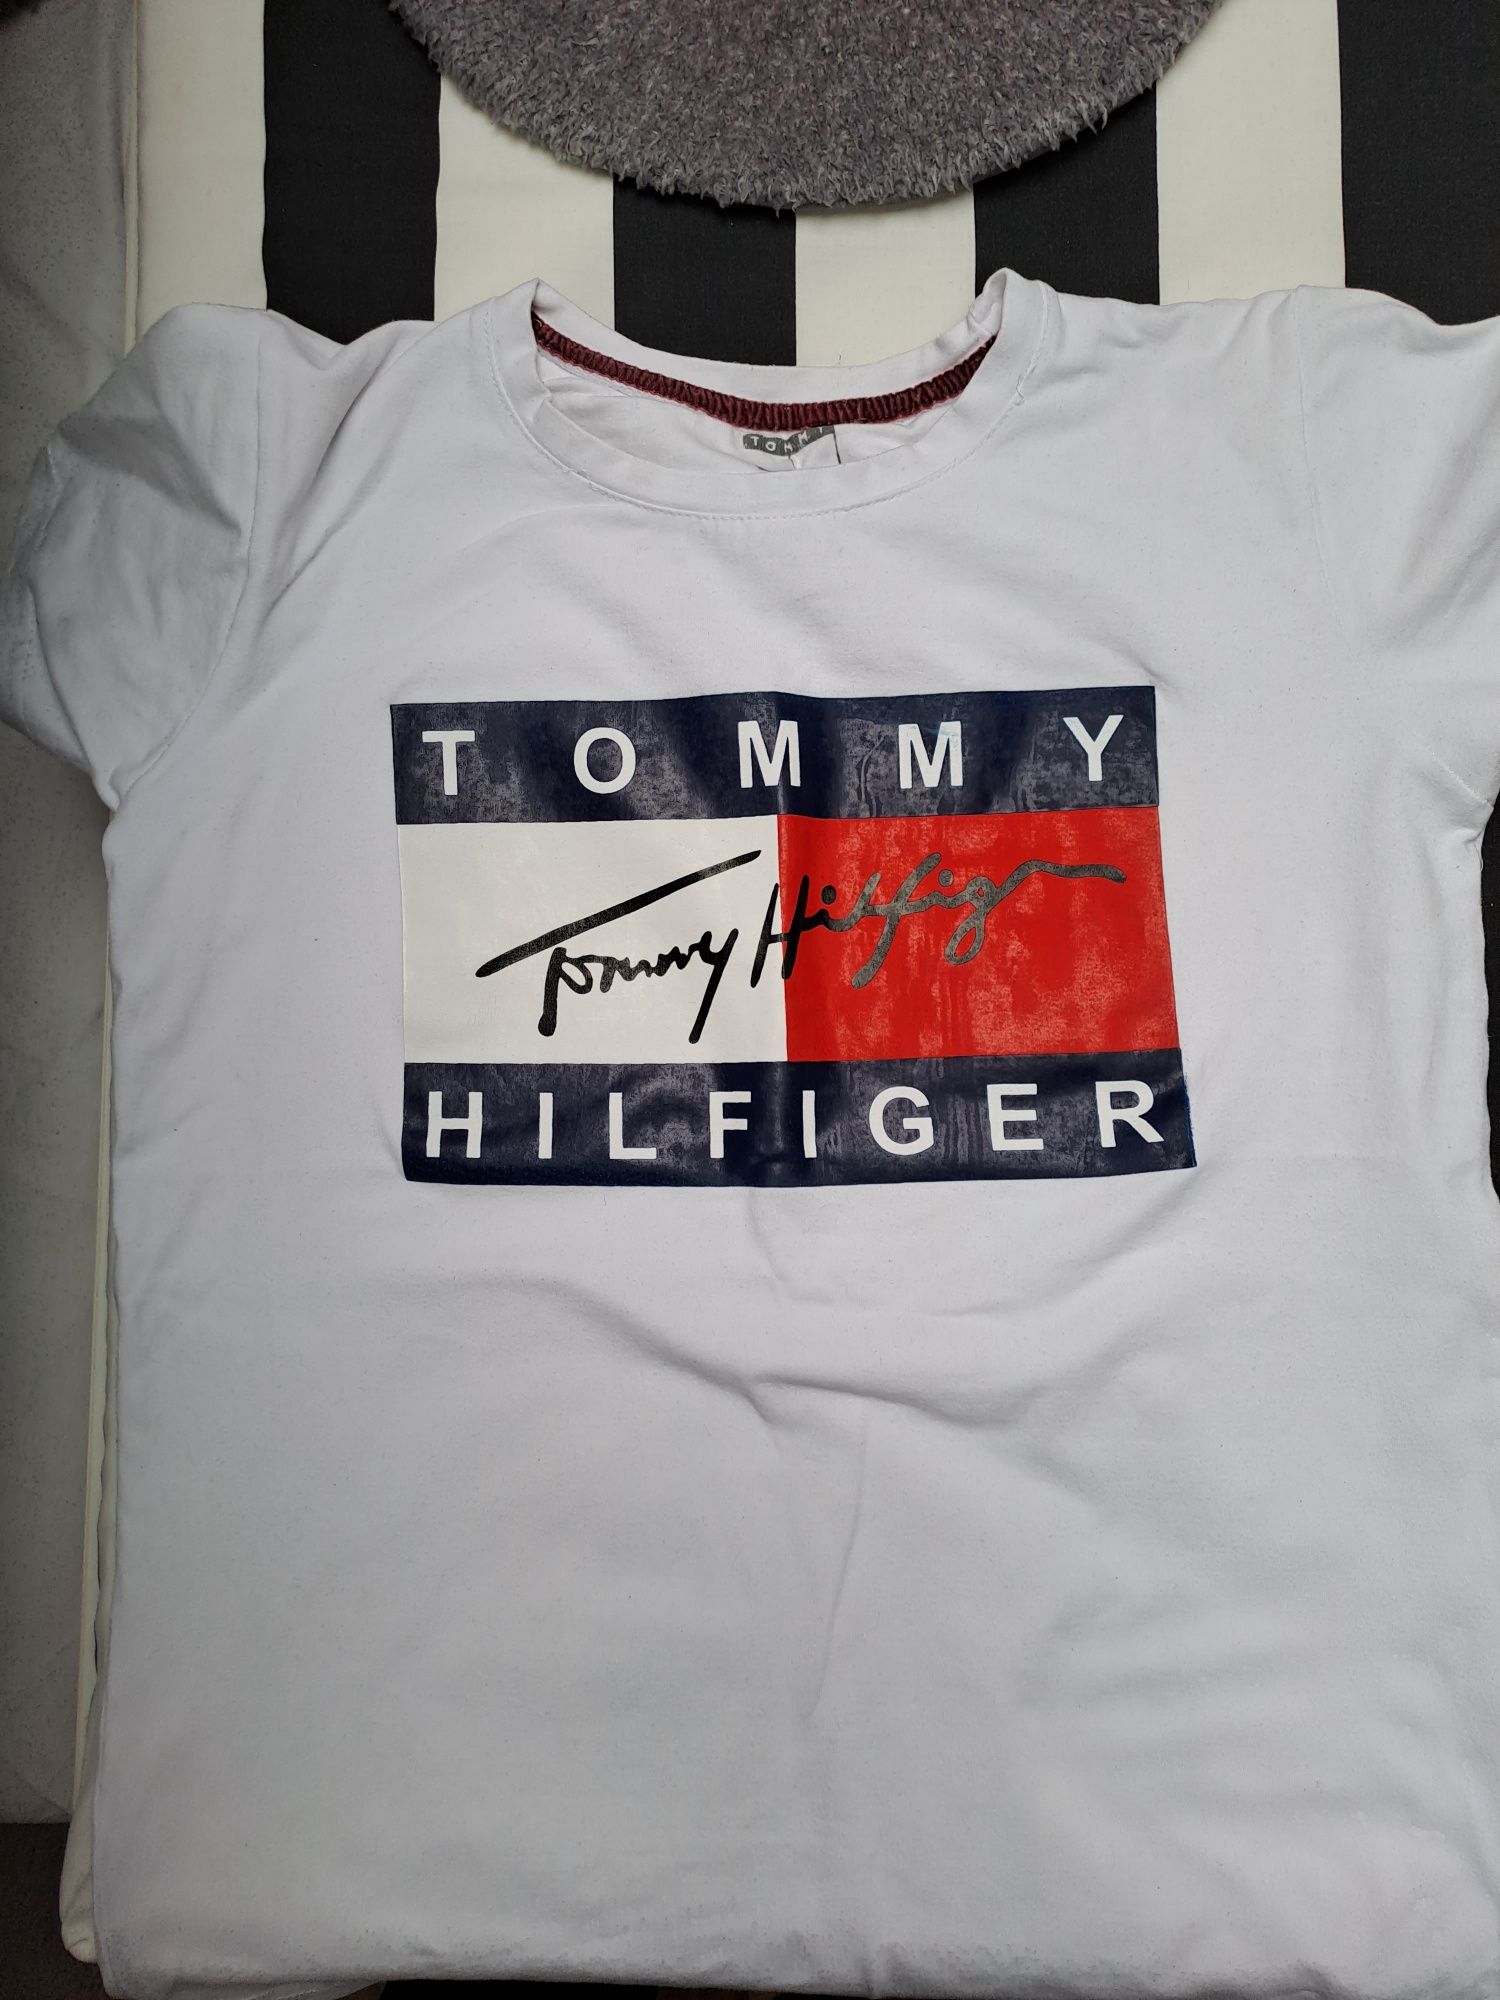 Koszulka Tommy Hilfiger